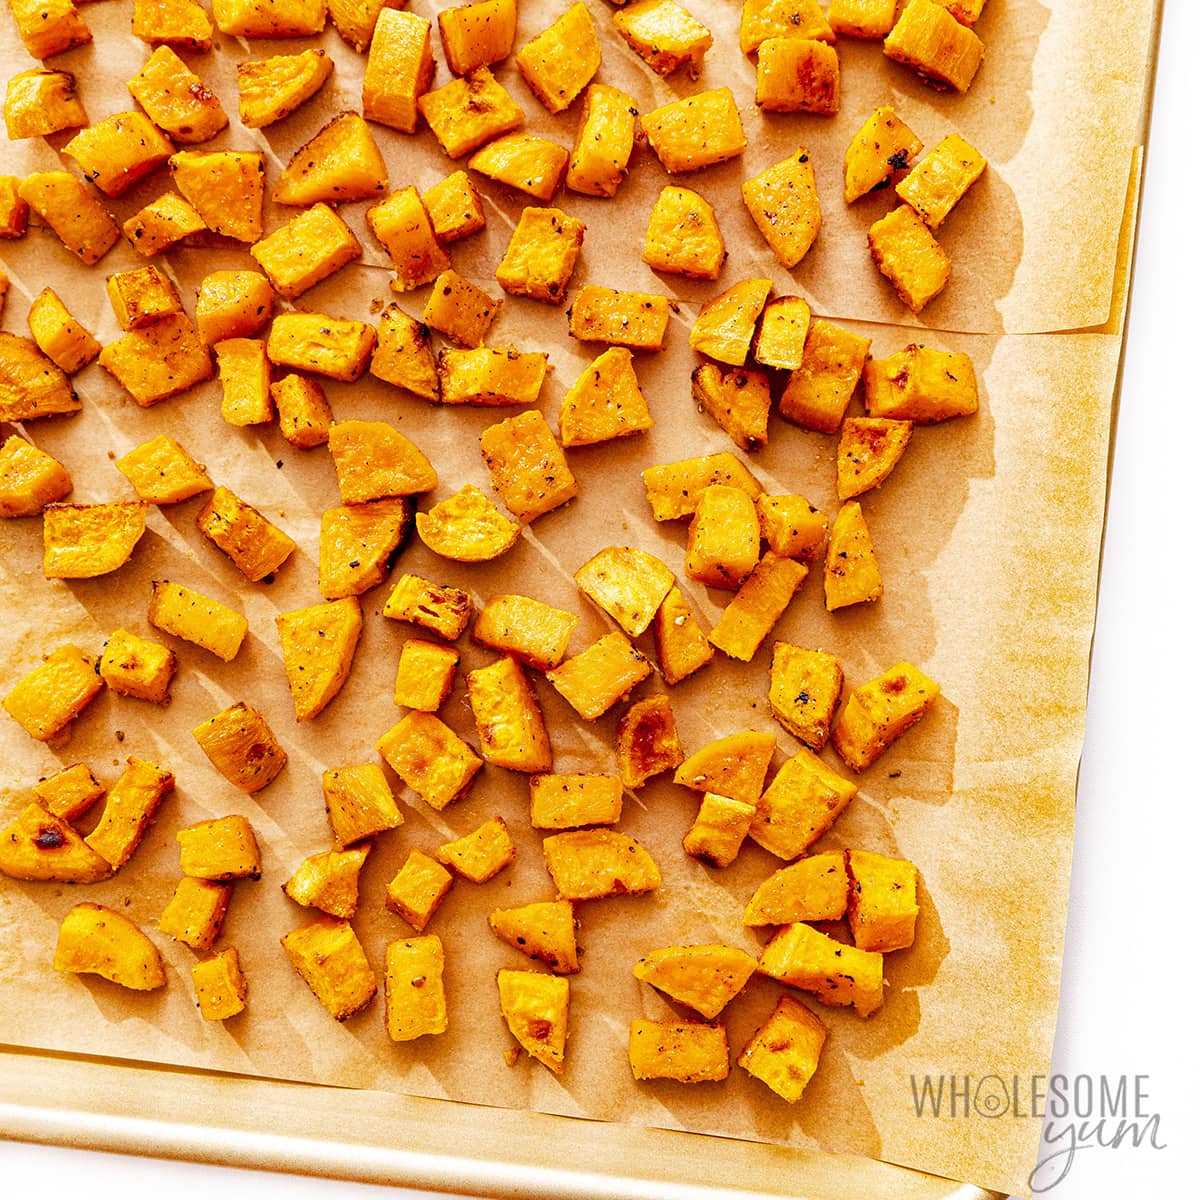 Roasted sweet potatoes on a baking sheet.